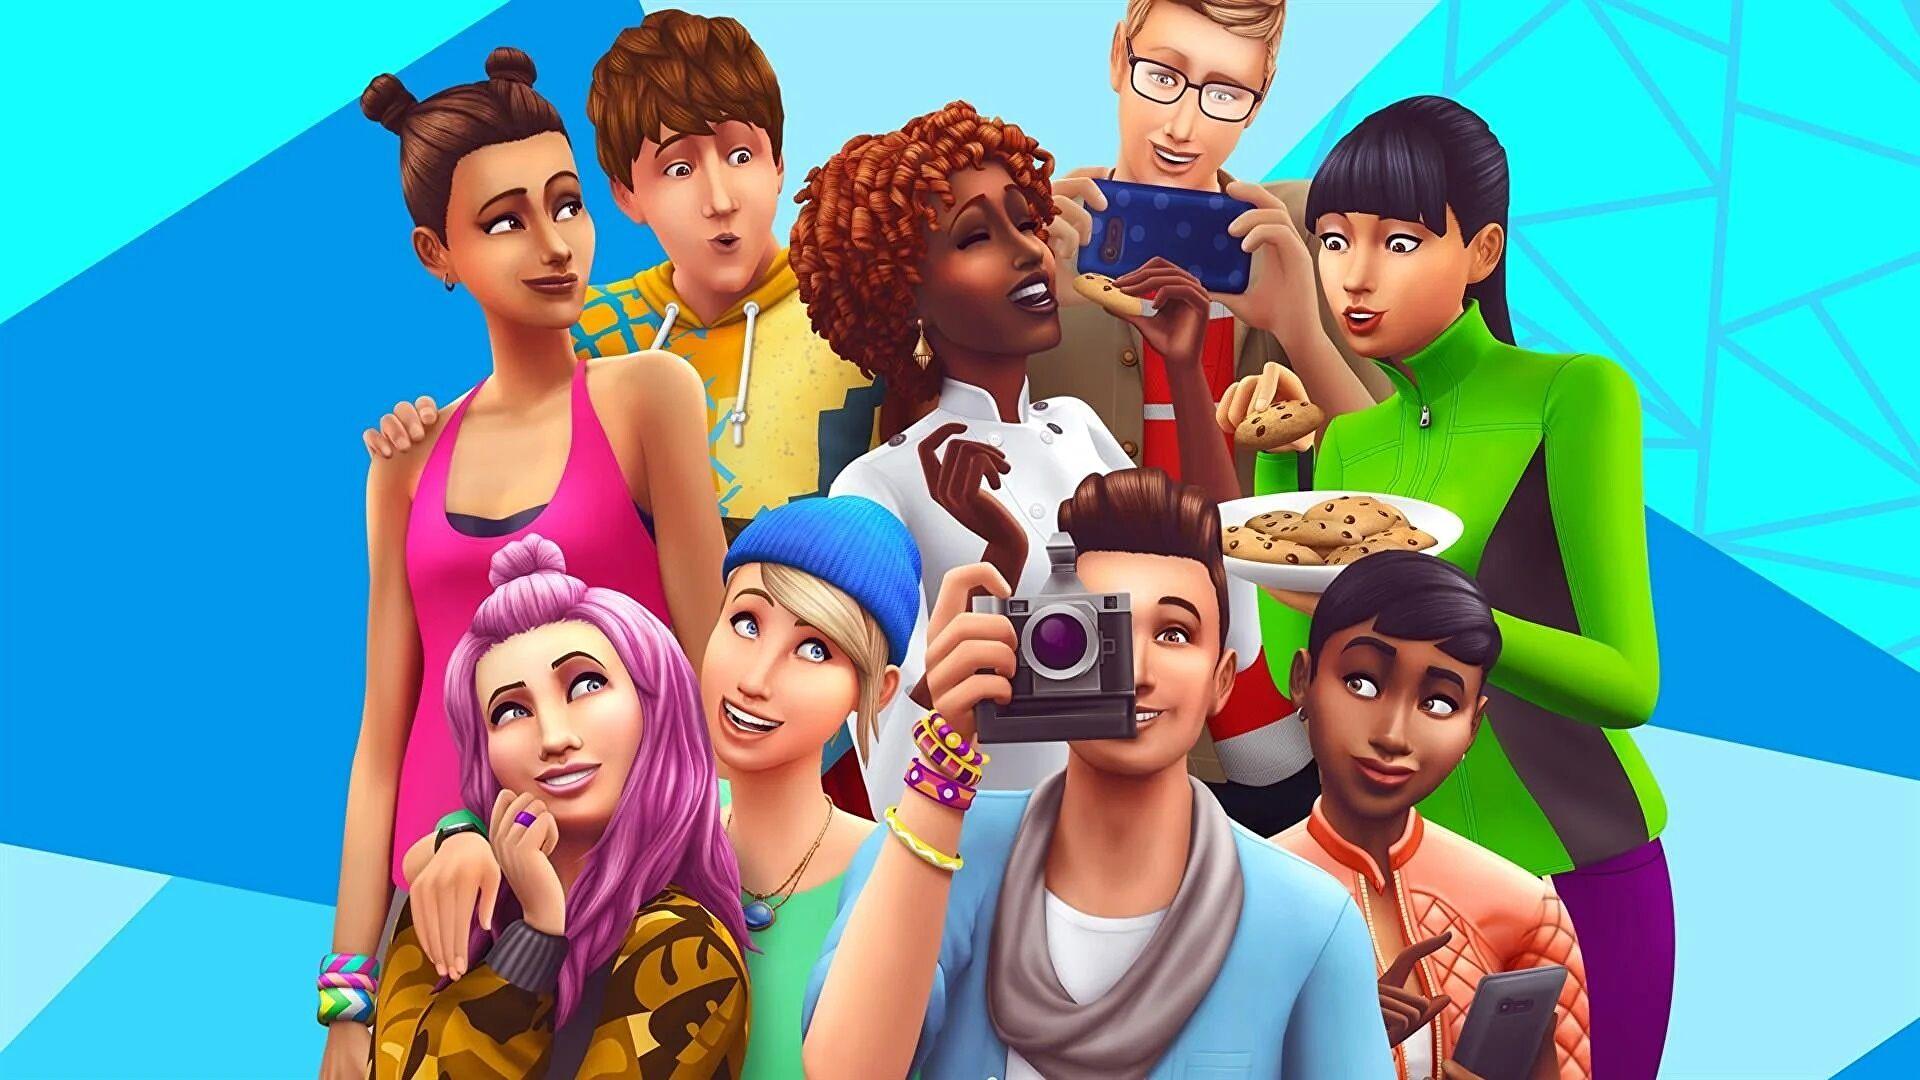 Wat is er mis je bent Initiatief Here's How to Unlock 'The Sims 4' Cheats on Xbox